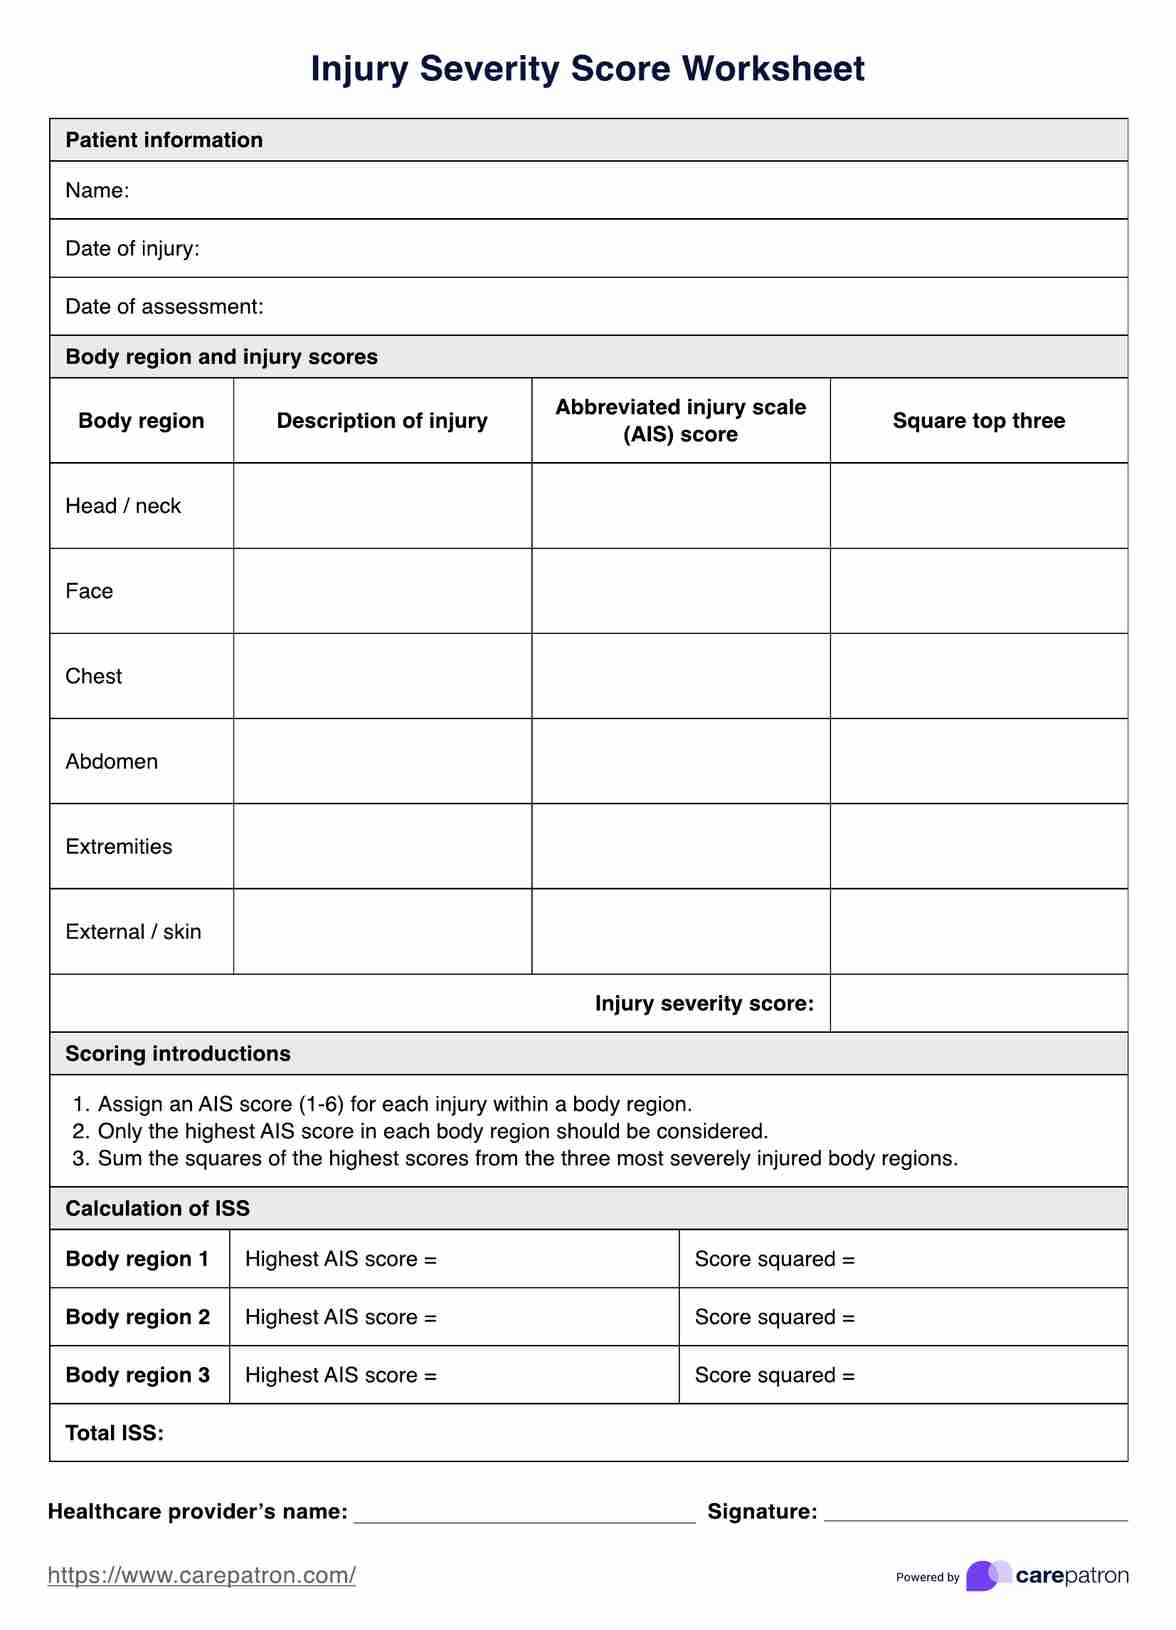 Injury Severity Score Worksheet PDF Example